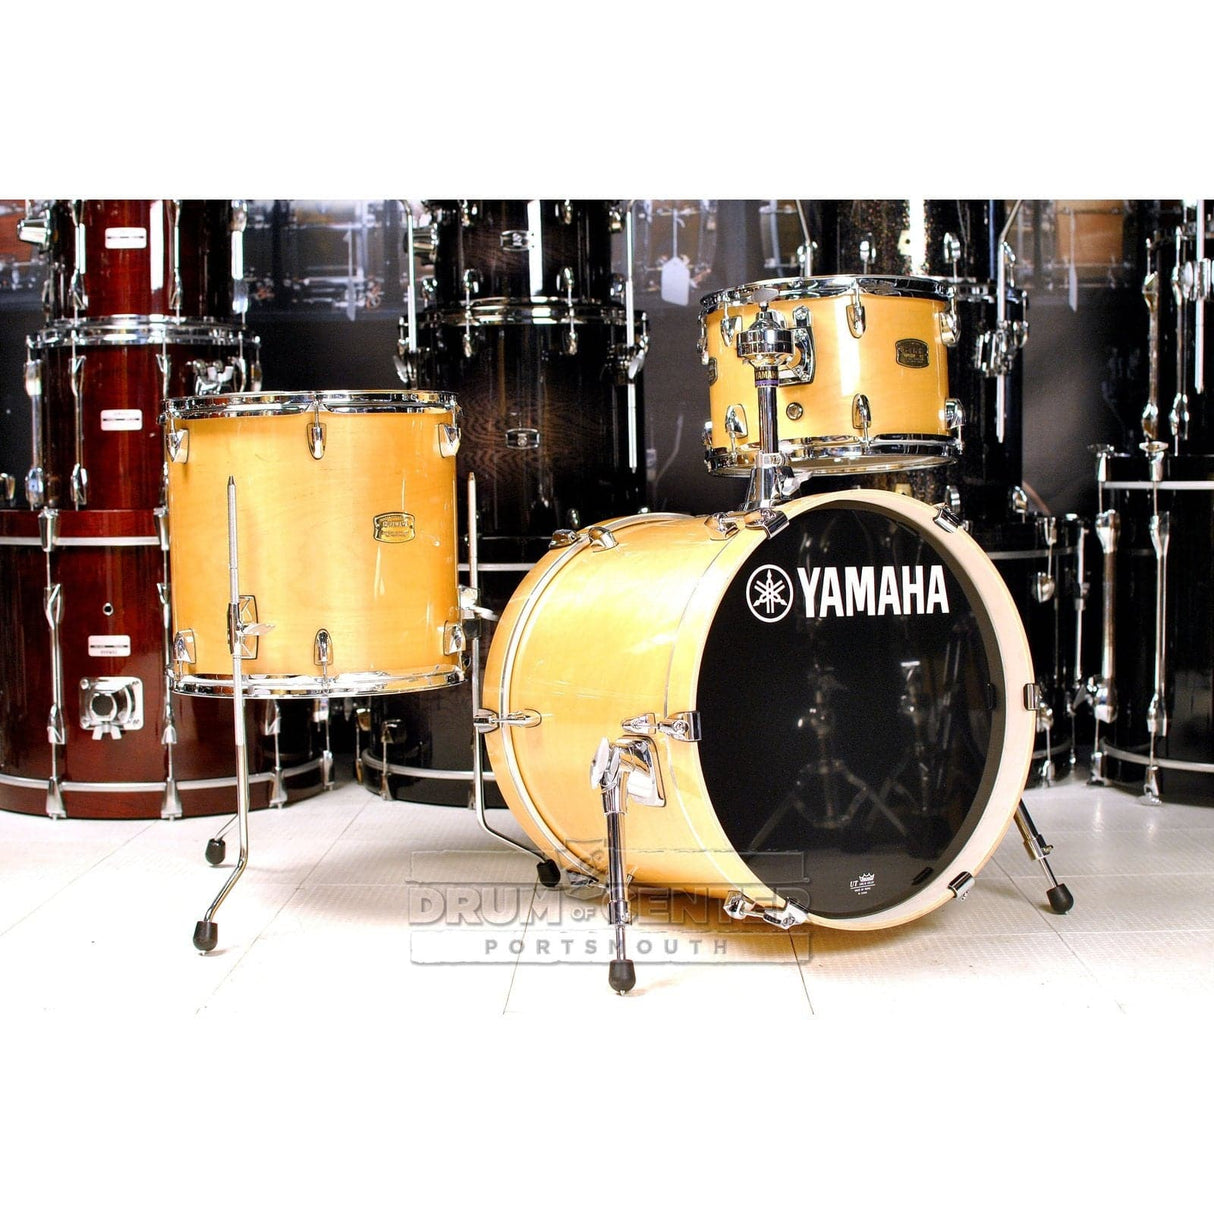 Yamaha Stage Custom Birch Jazz 3pc Drum Set Natural Wood